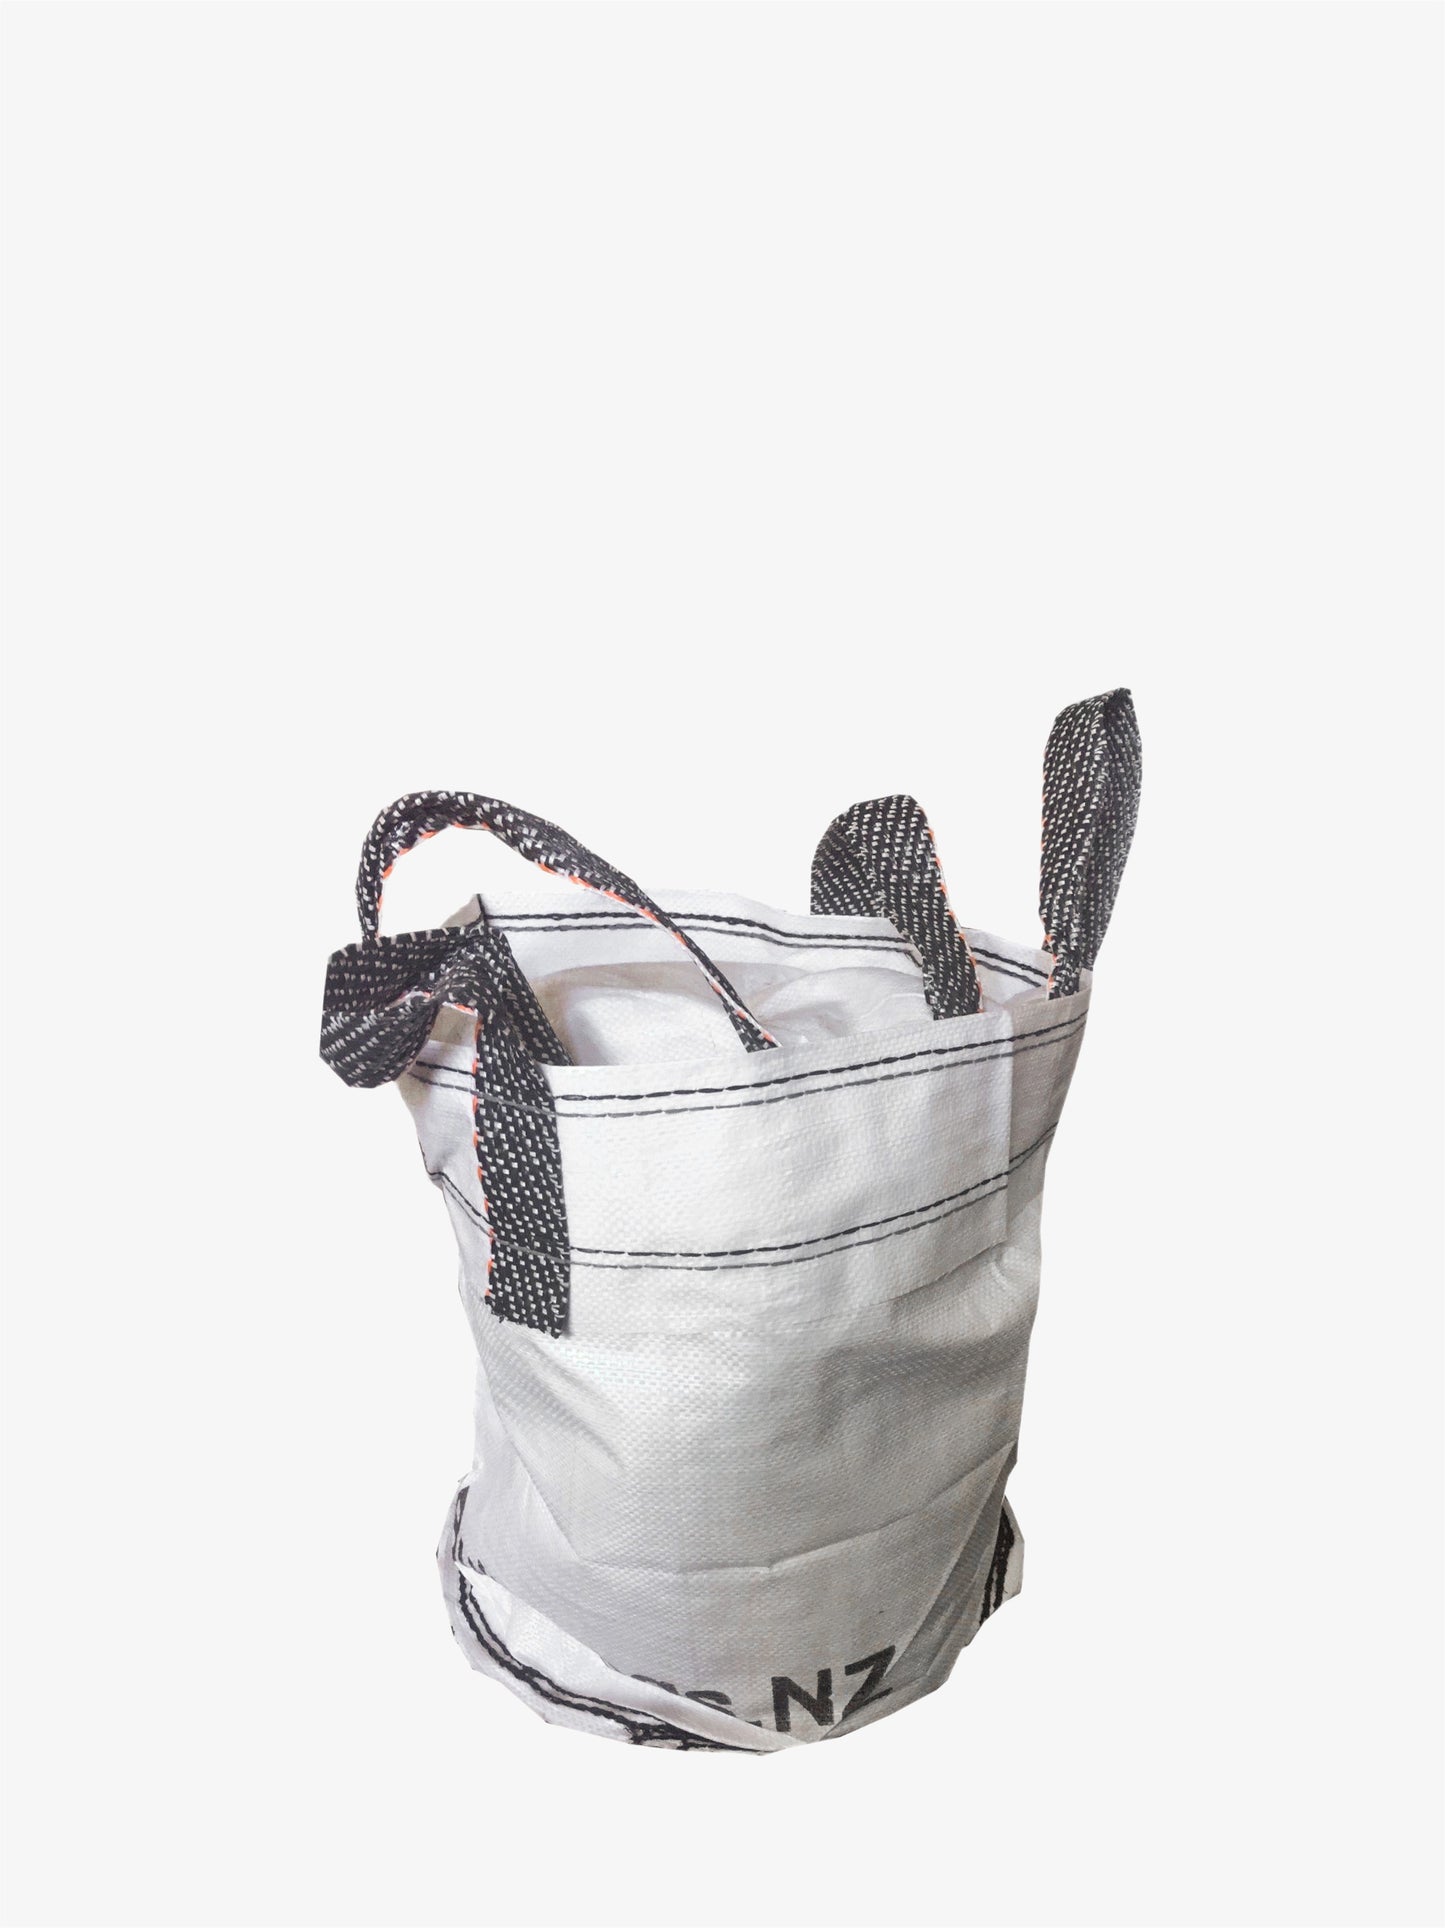 TYPE S | Scaffold Bag | Open Top | Flat Bottom | 380 x 330 | 20 Bags